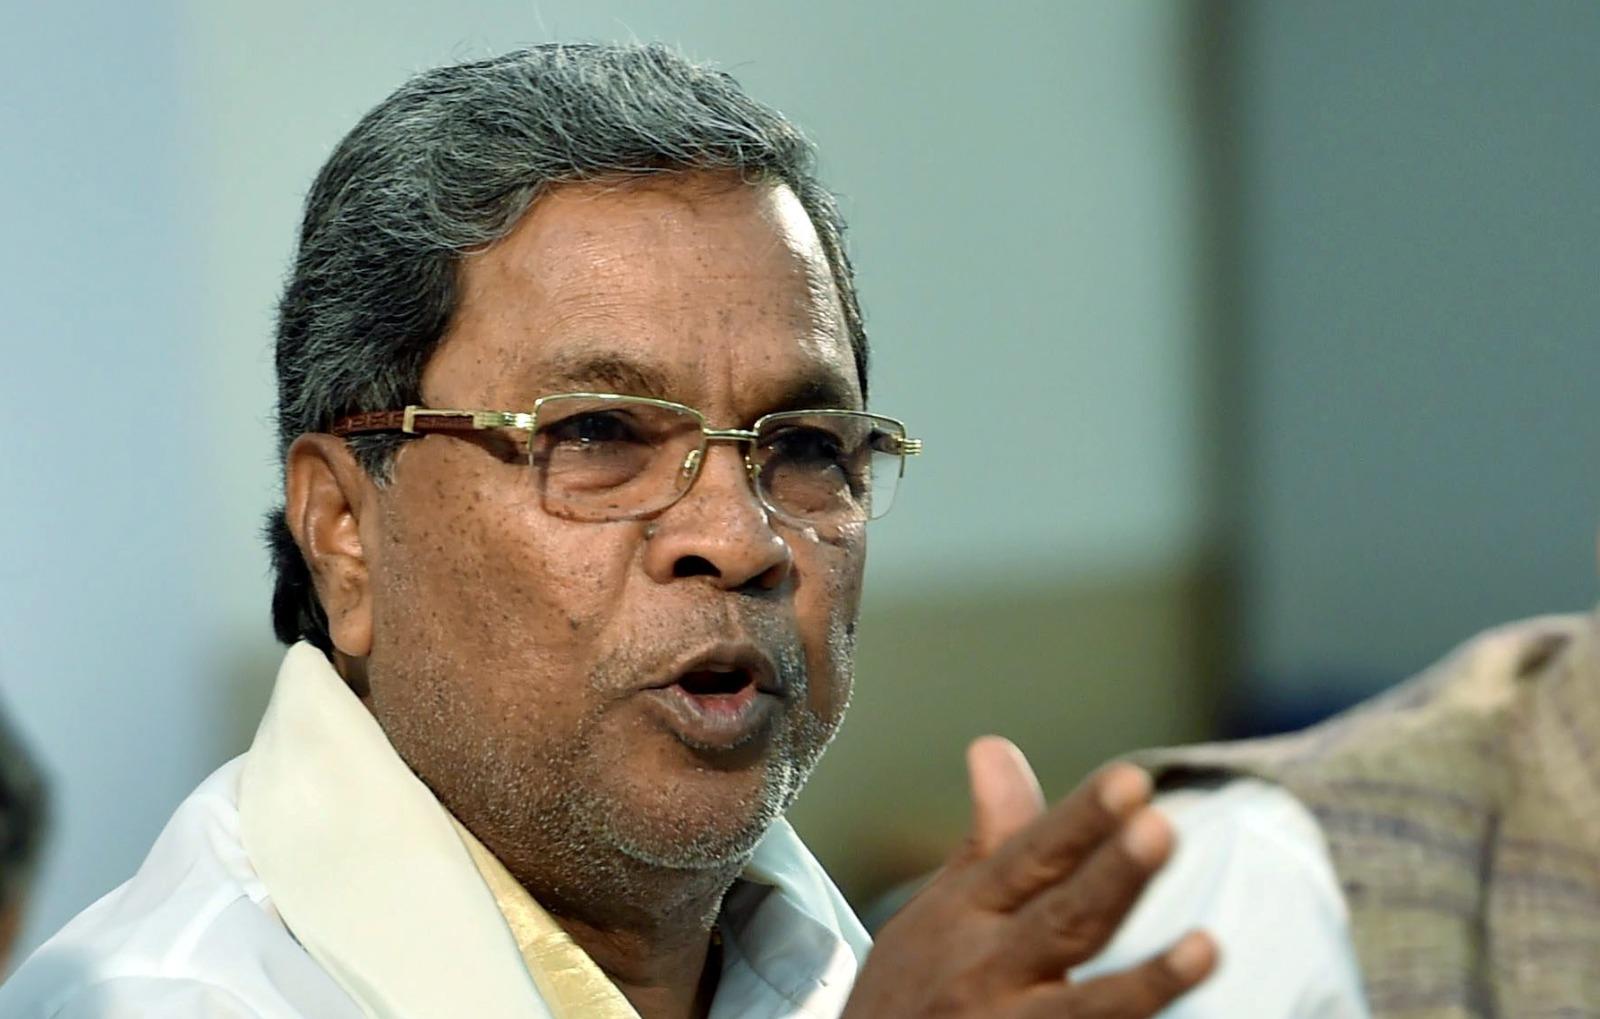 No holiday for Pratishtha, clarifies Karnataka CM